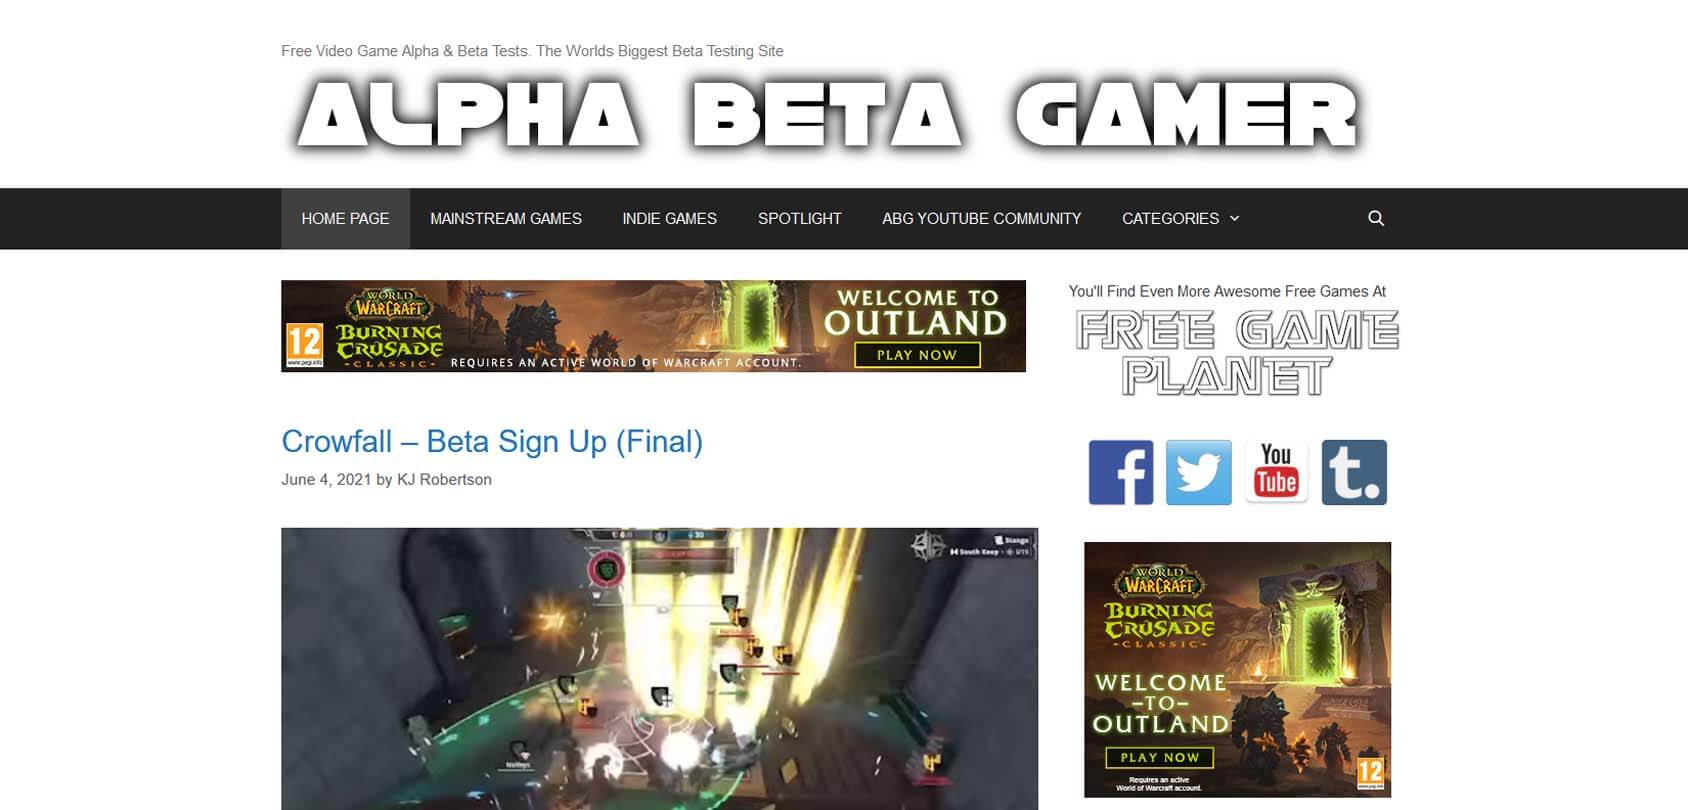 Alpha Beta Gamer Homepage